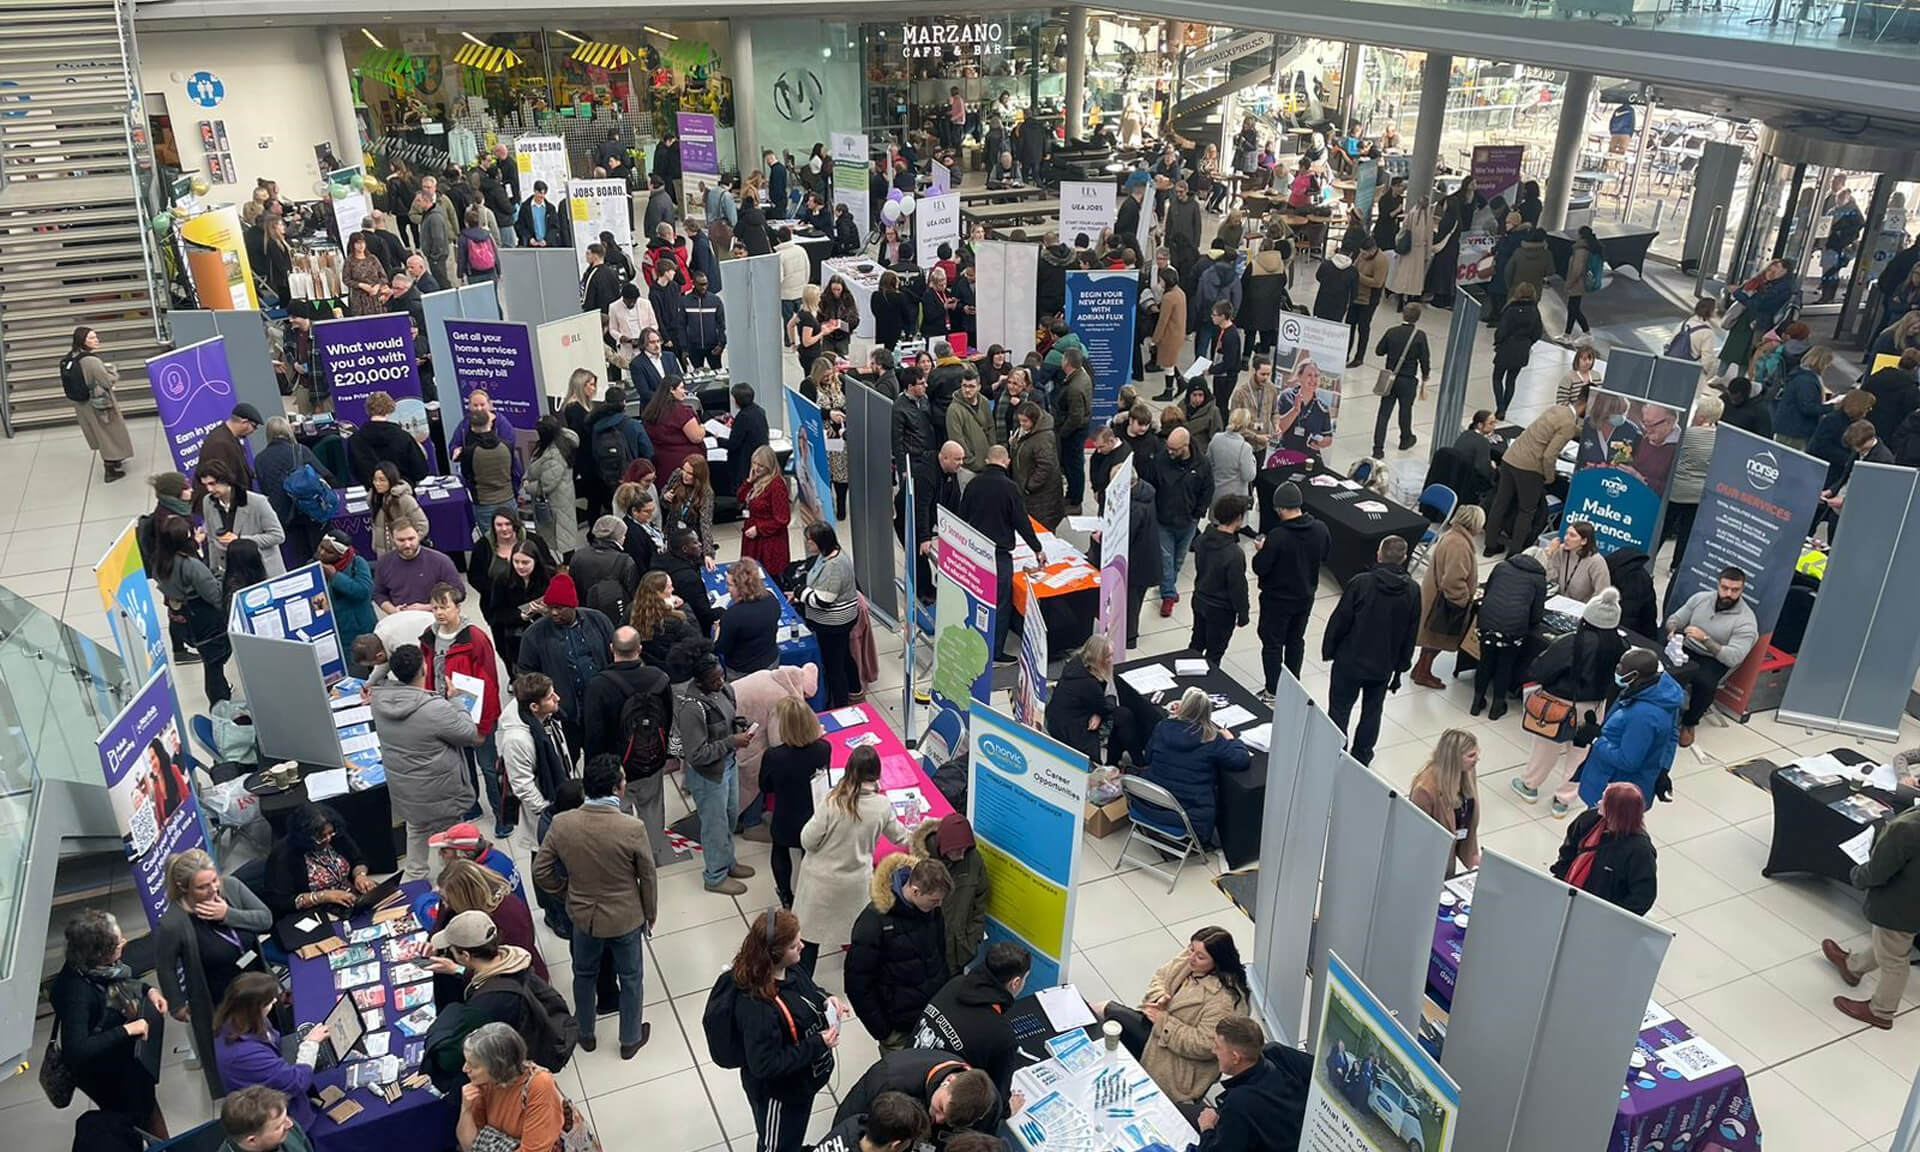 Norwich Jobs Fair in action